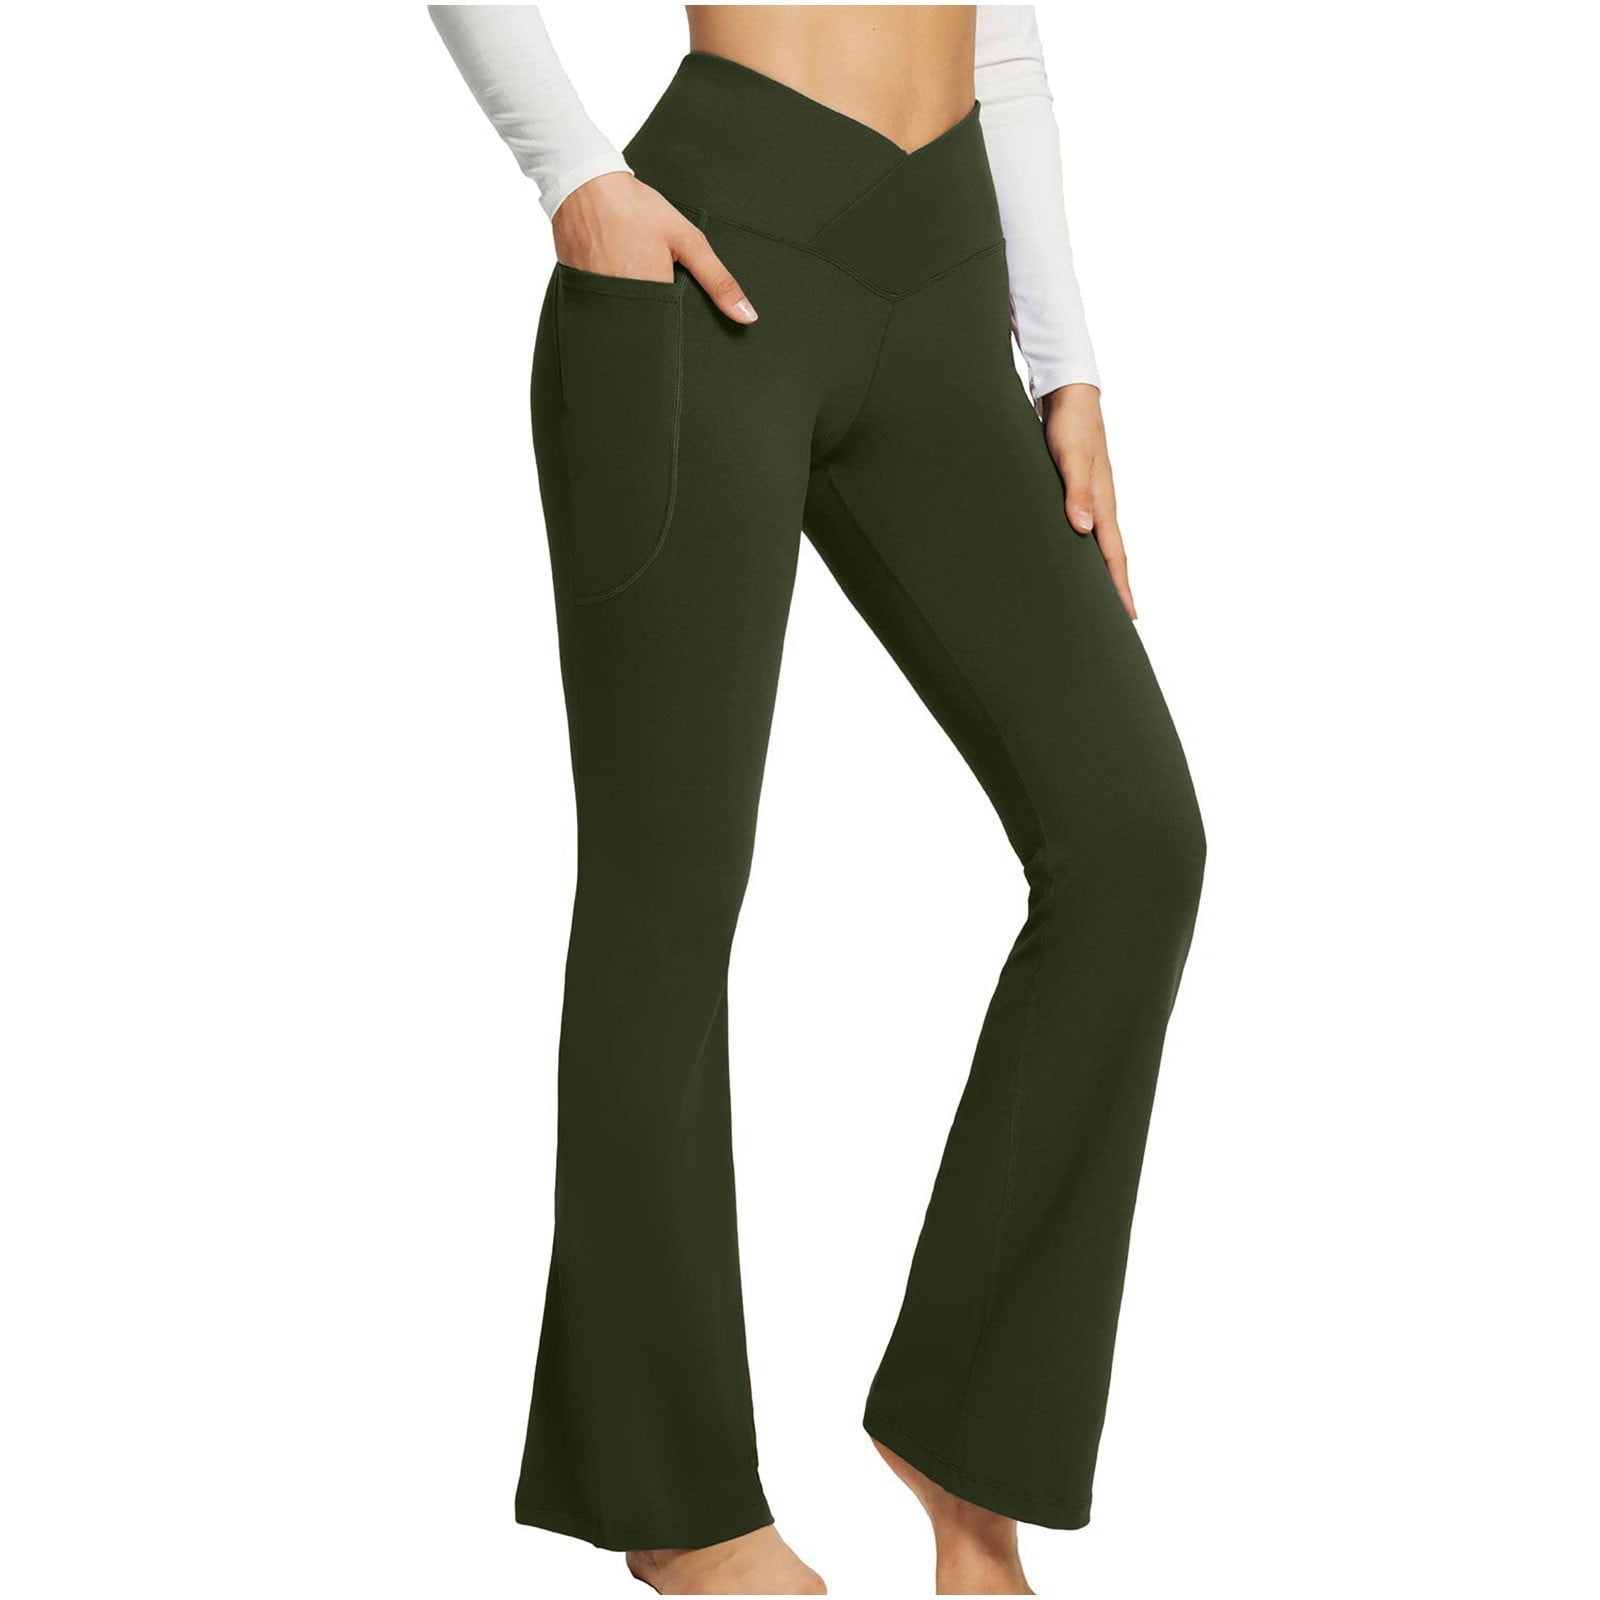 Women's Flare Pants for sale in Bowling Green, Kentucky